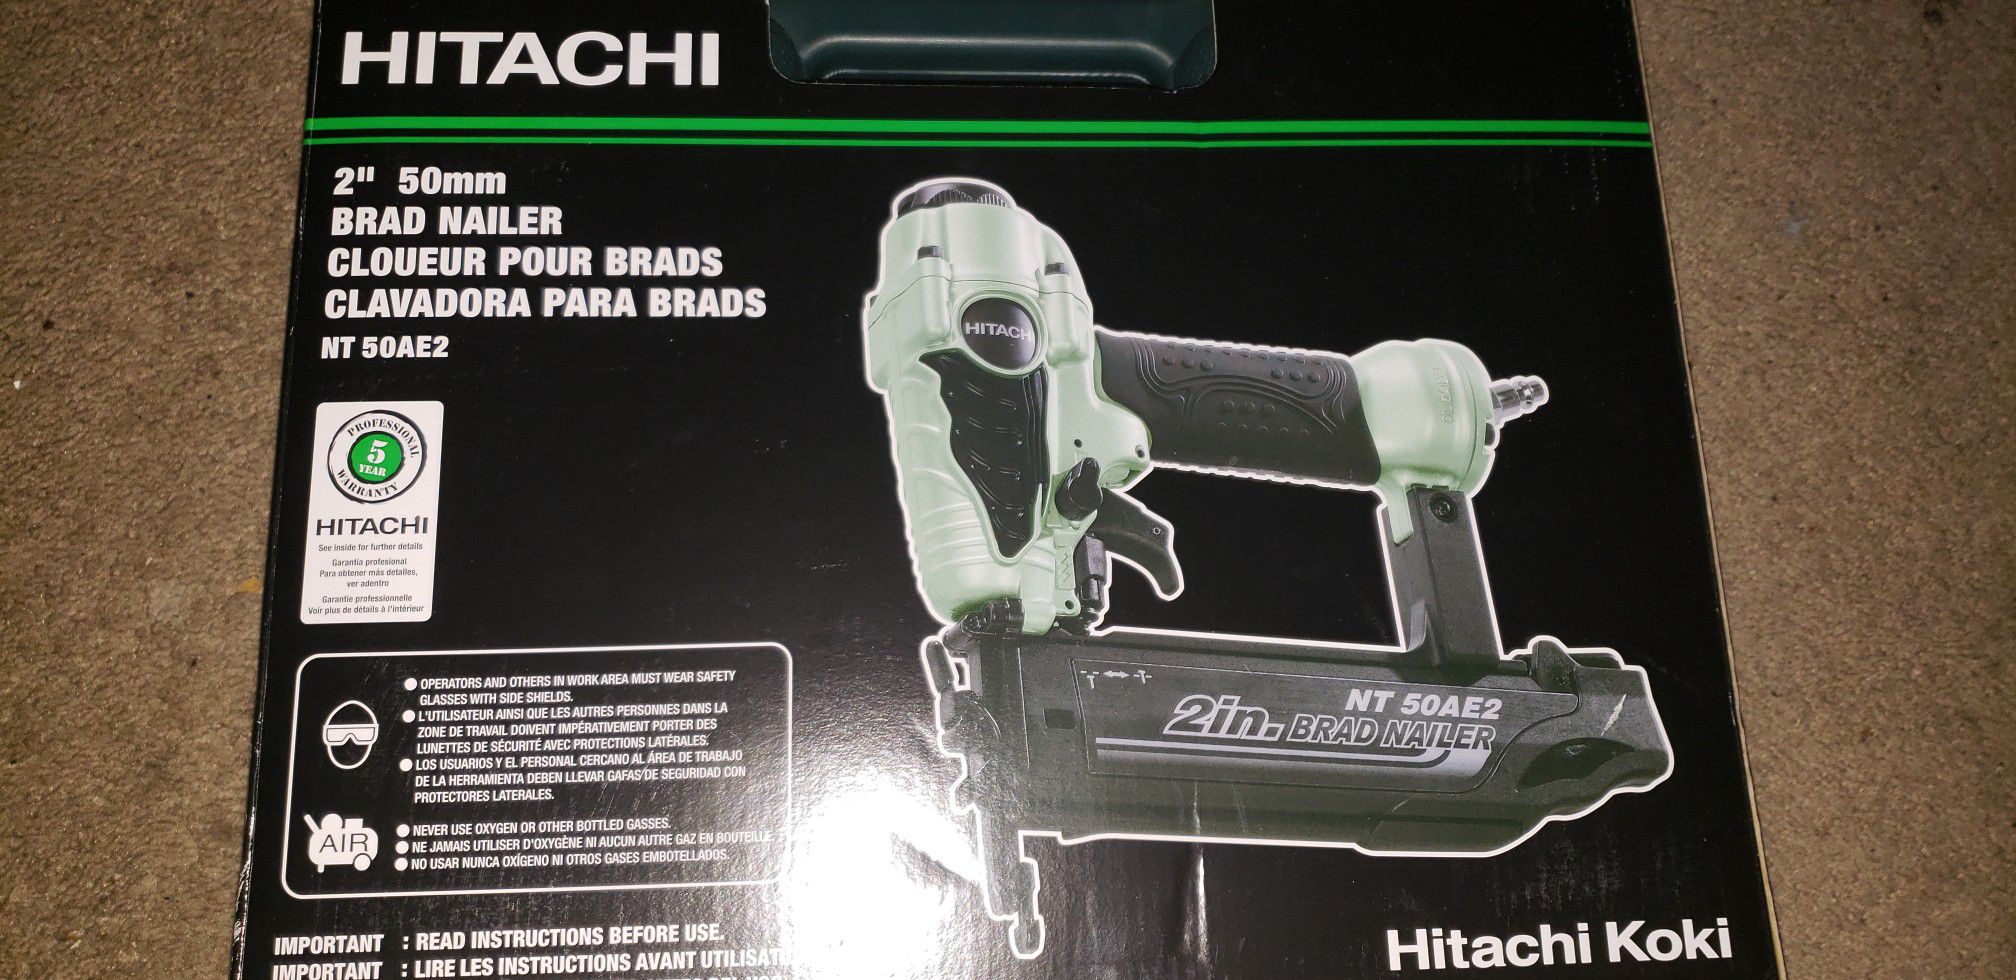 Hitachi brad nailer